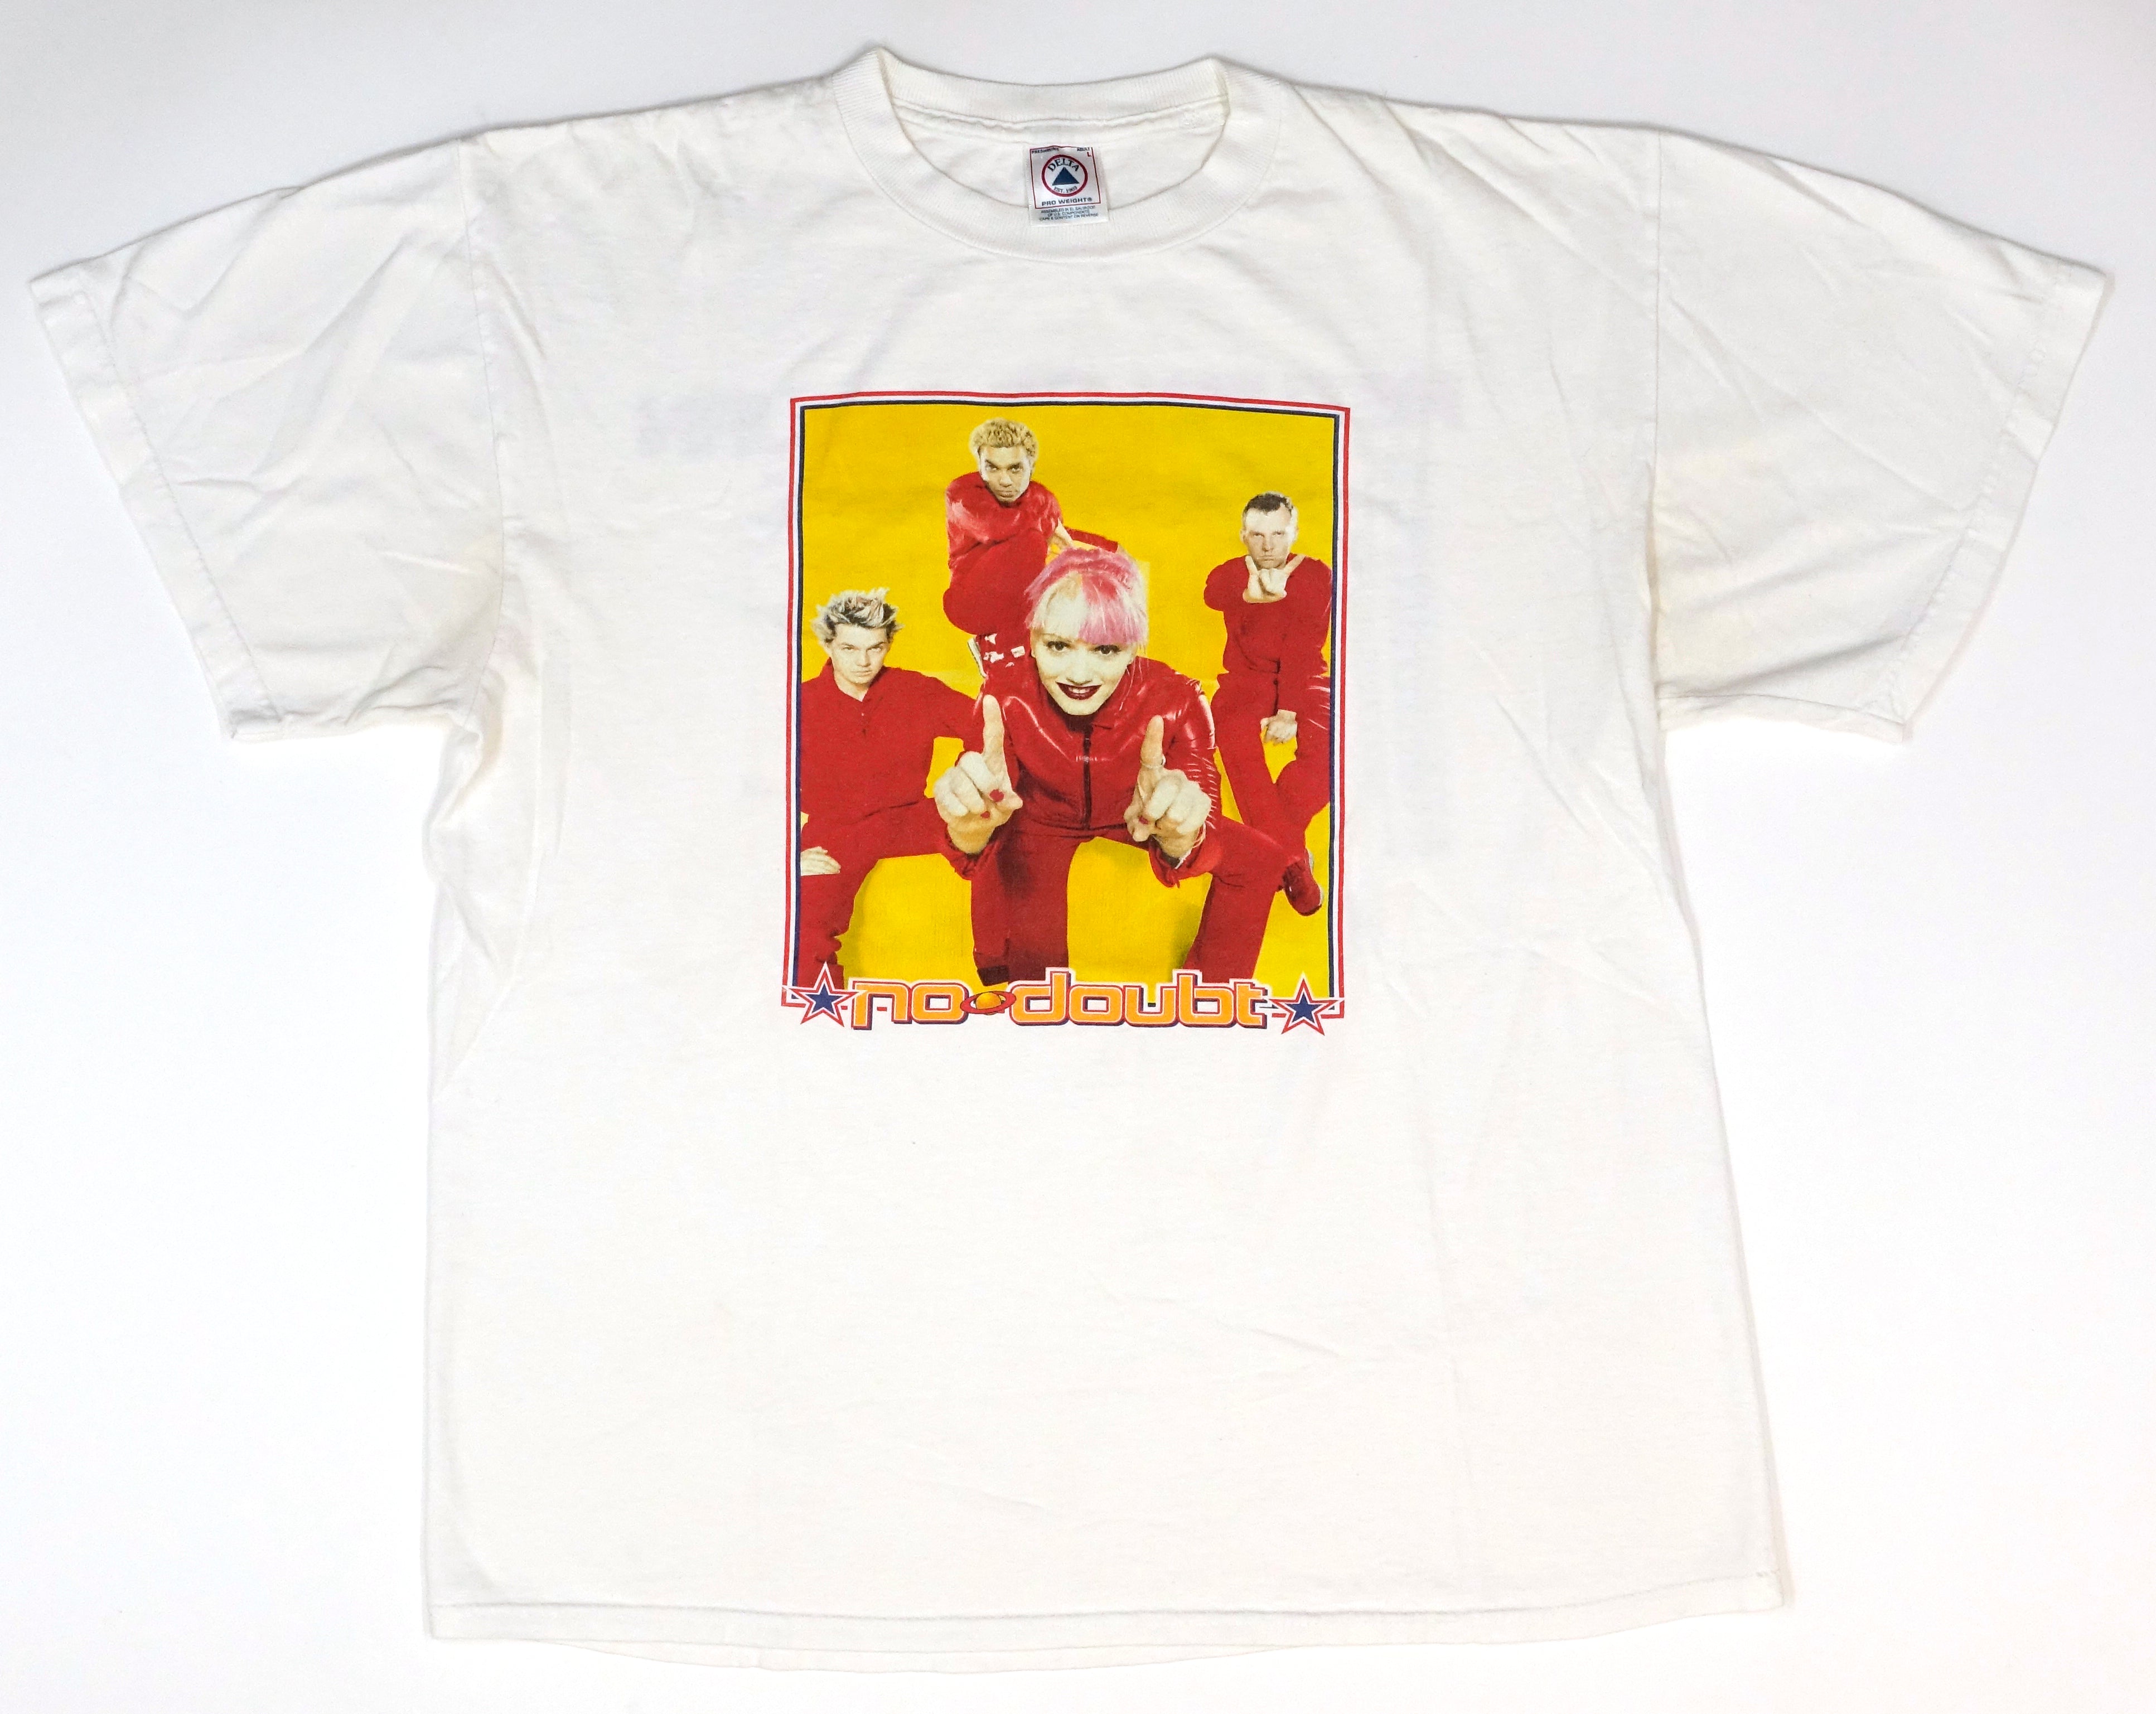 No Doubt - Return Of Saturn 2000 Tour Shirt Size Large